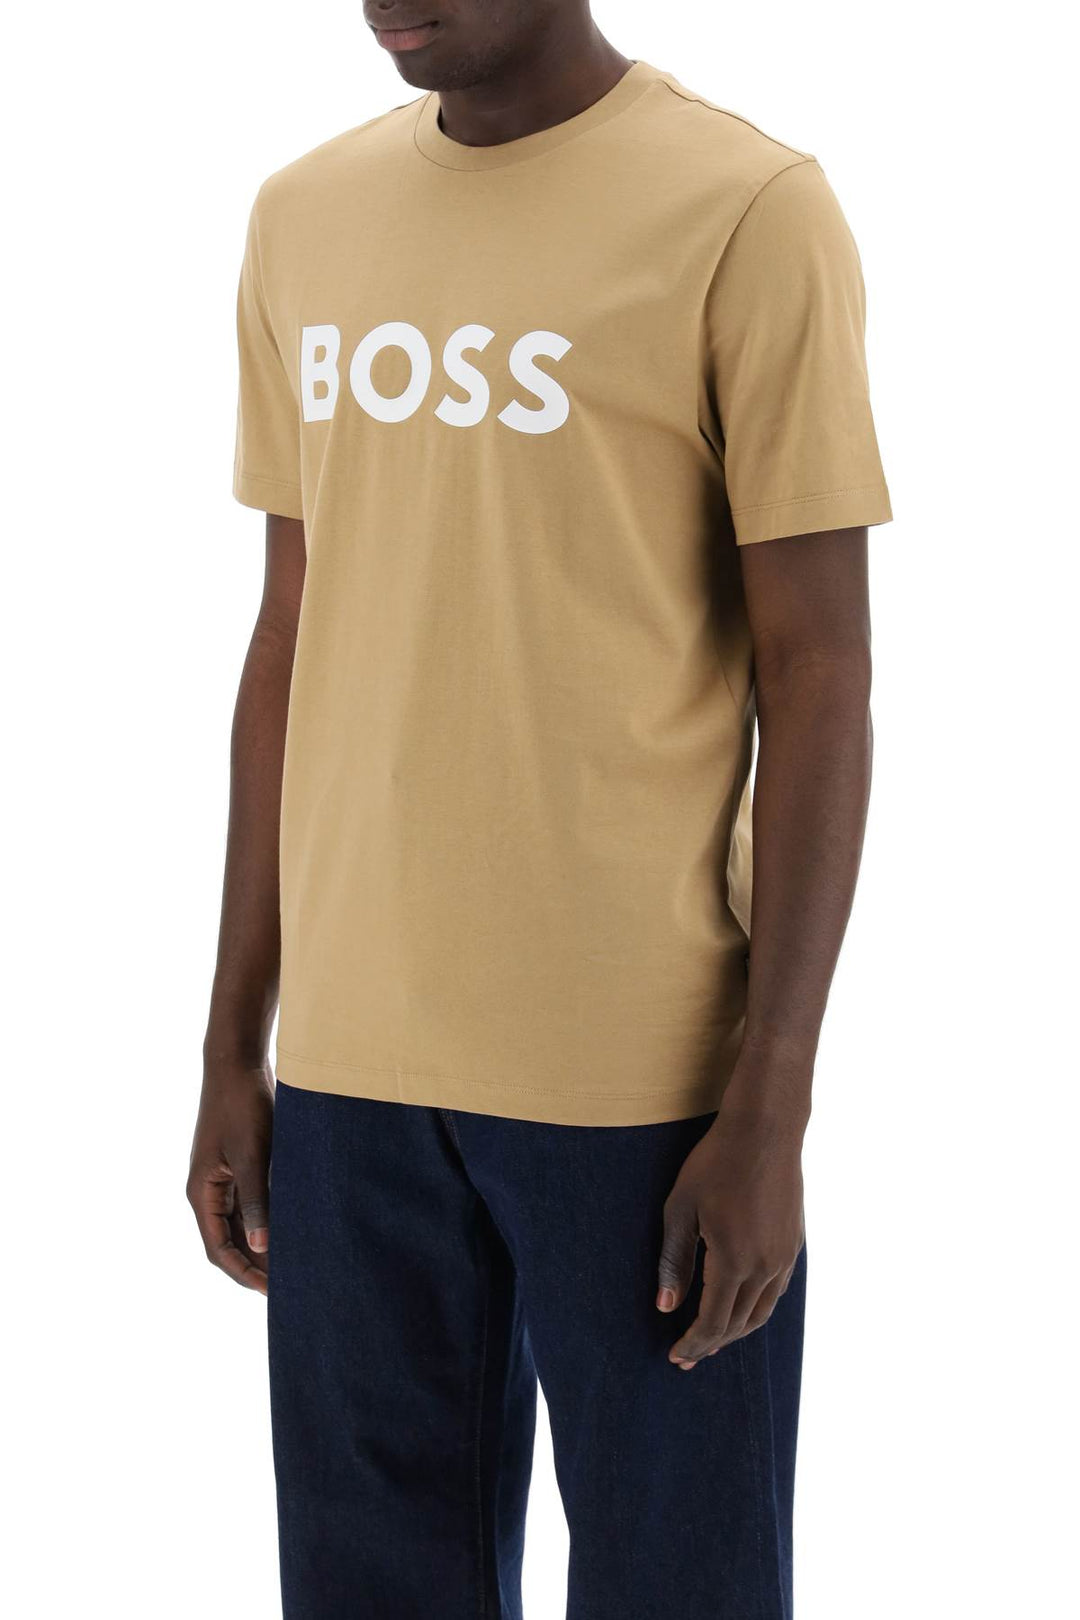 Boss Tiburt 354 Logo Print T Shirt   Beige